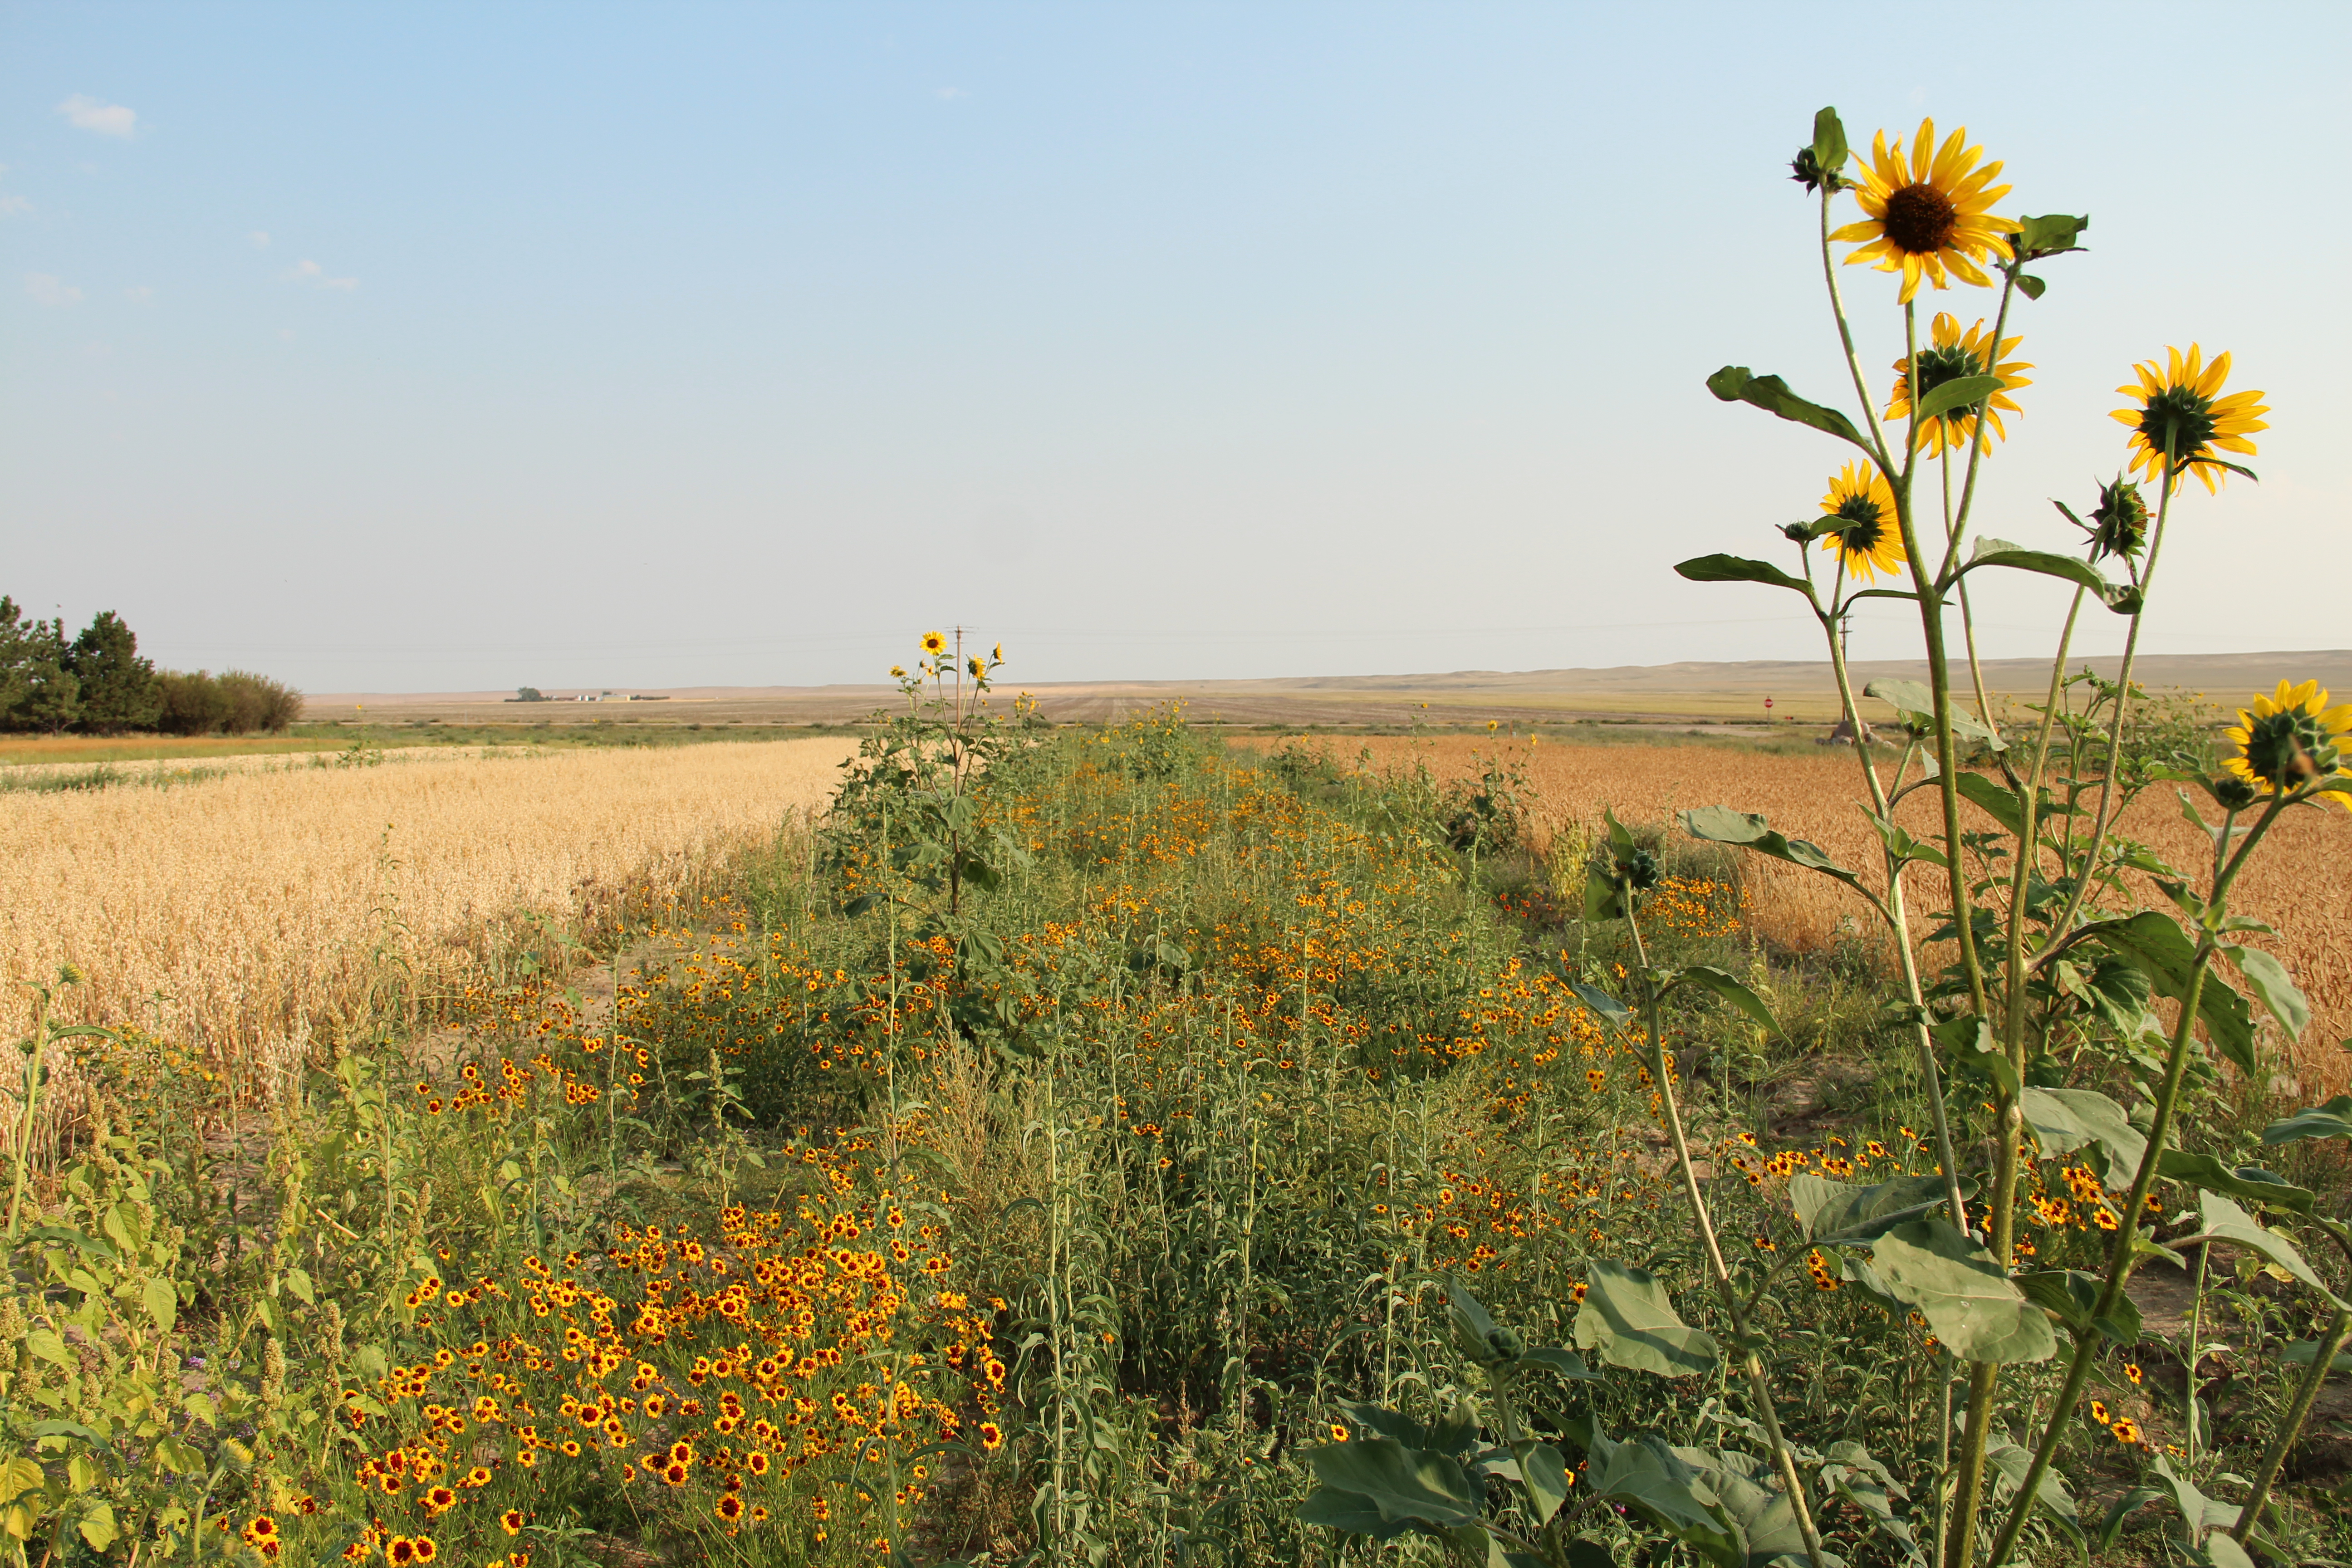 A strip of sunflowers along a field.